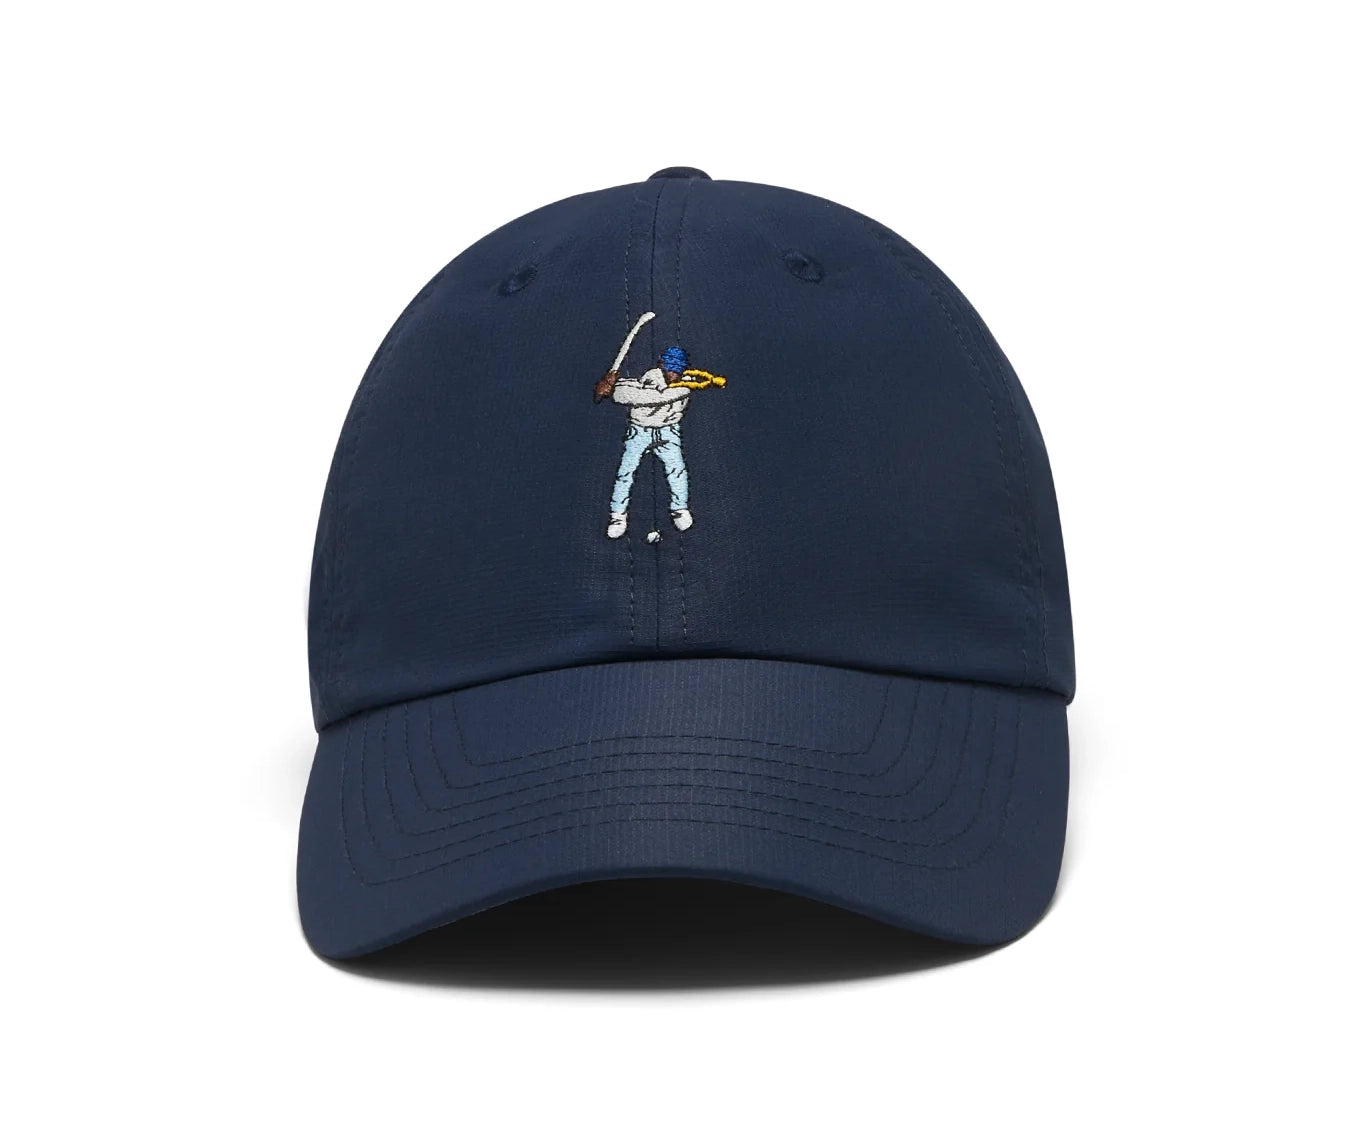 Tournament Hat